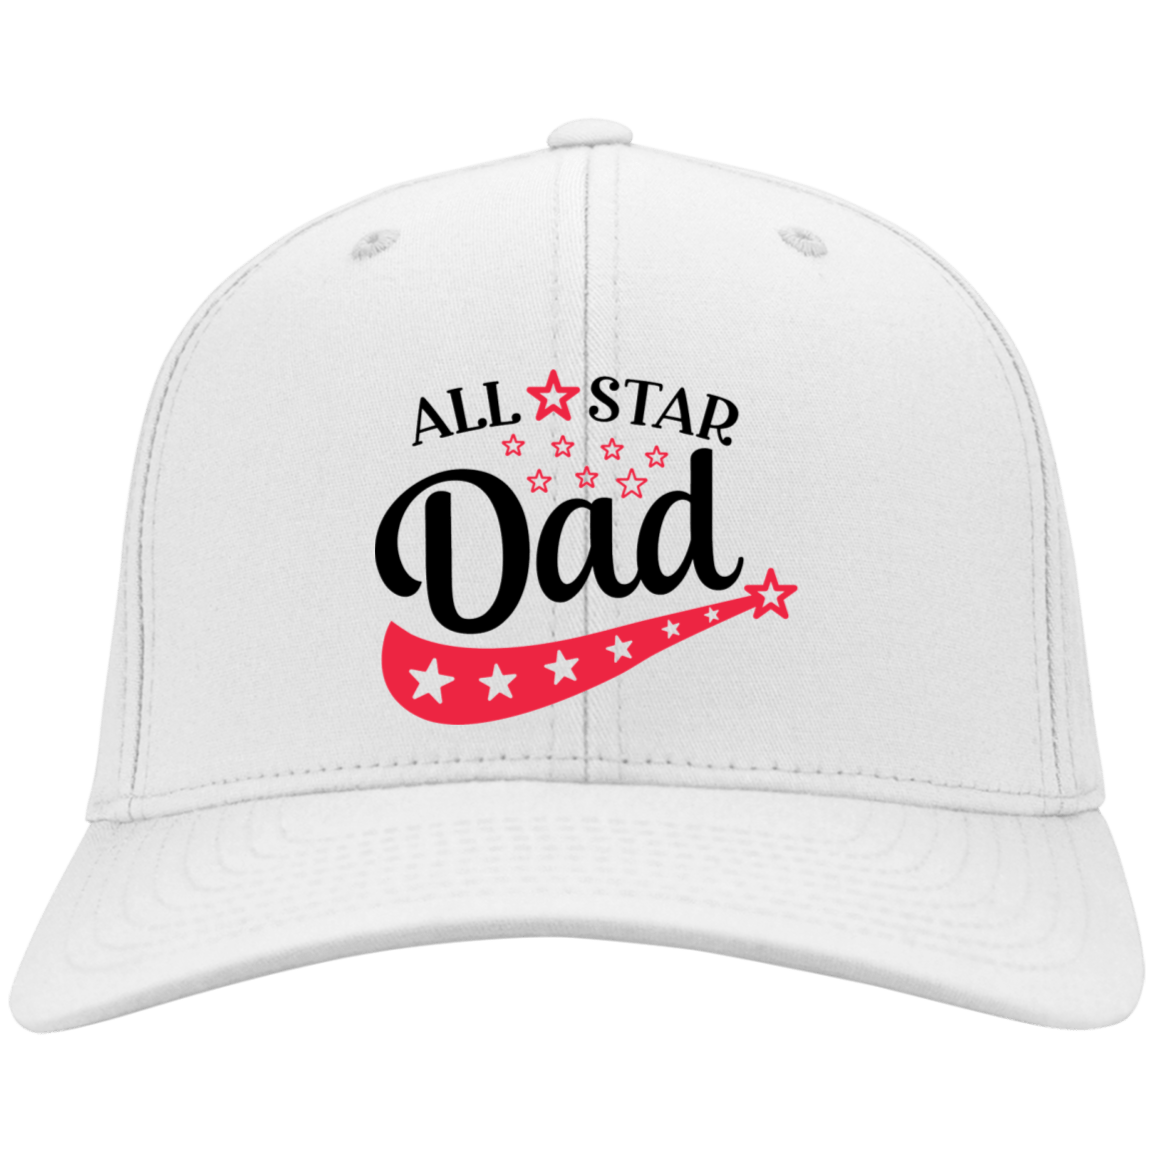 All Star Dad Twill Cap